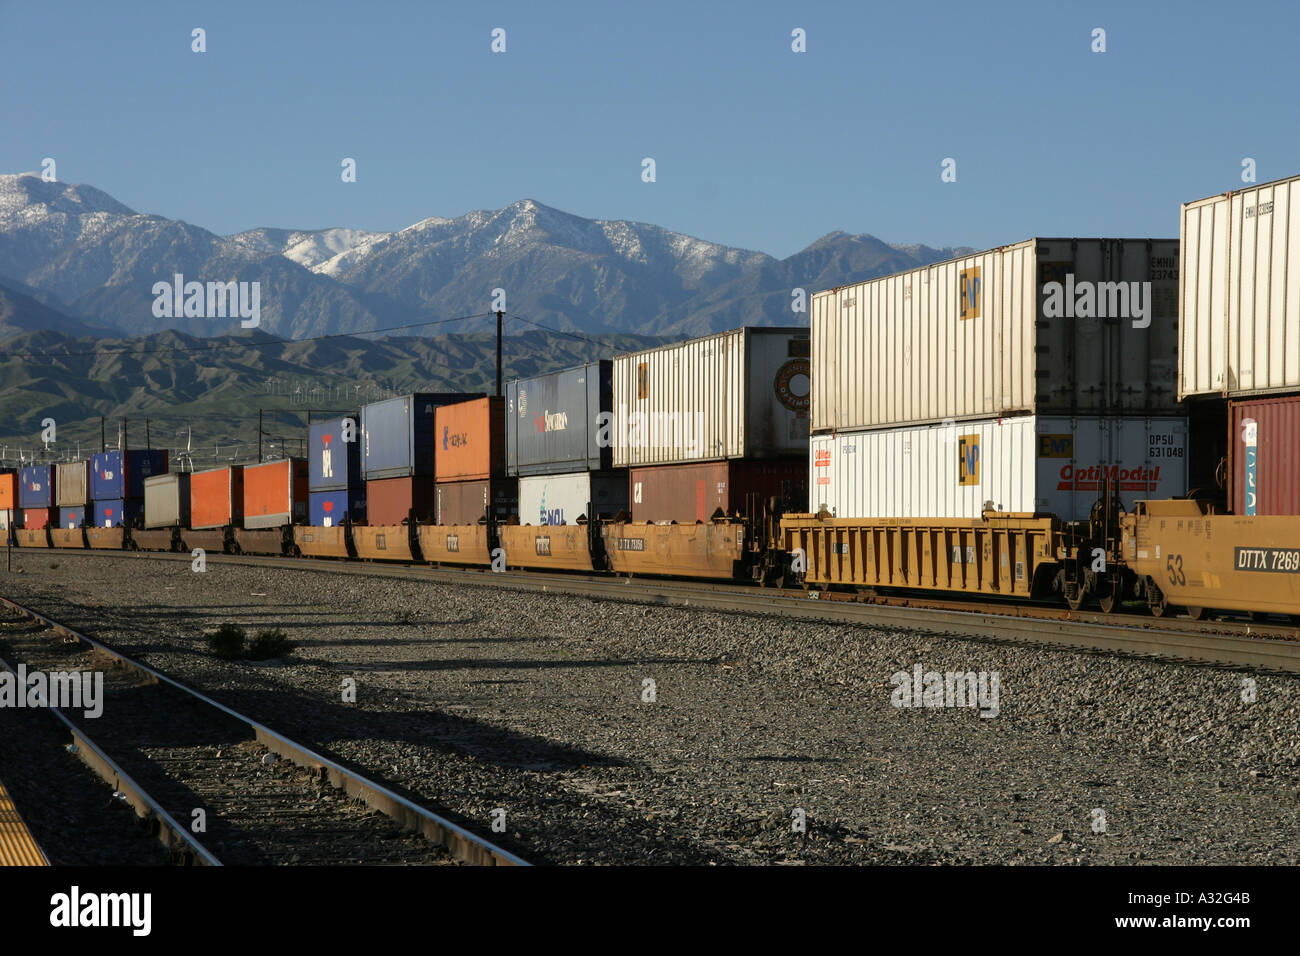 Opa kampioen Discipline Intermodal Train North Palm Springs USA Stock Photo - Alamy